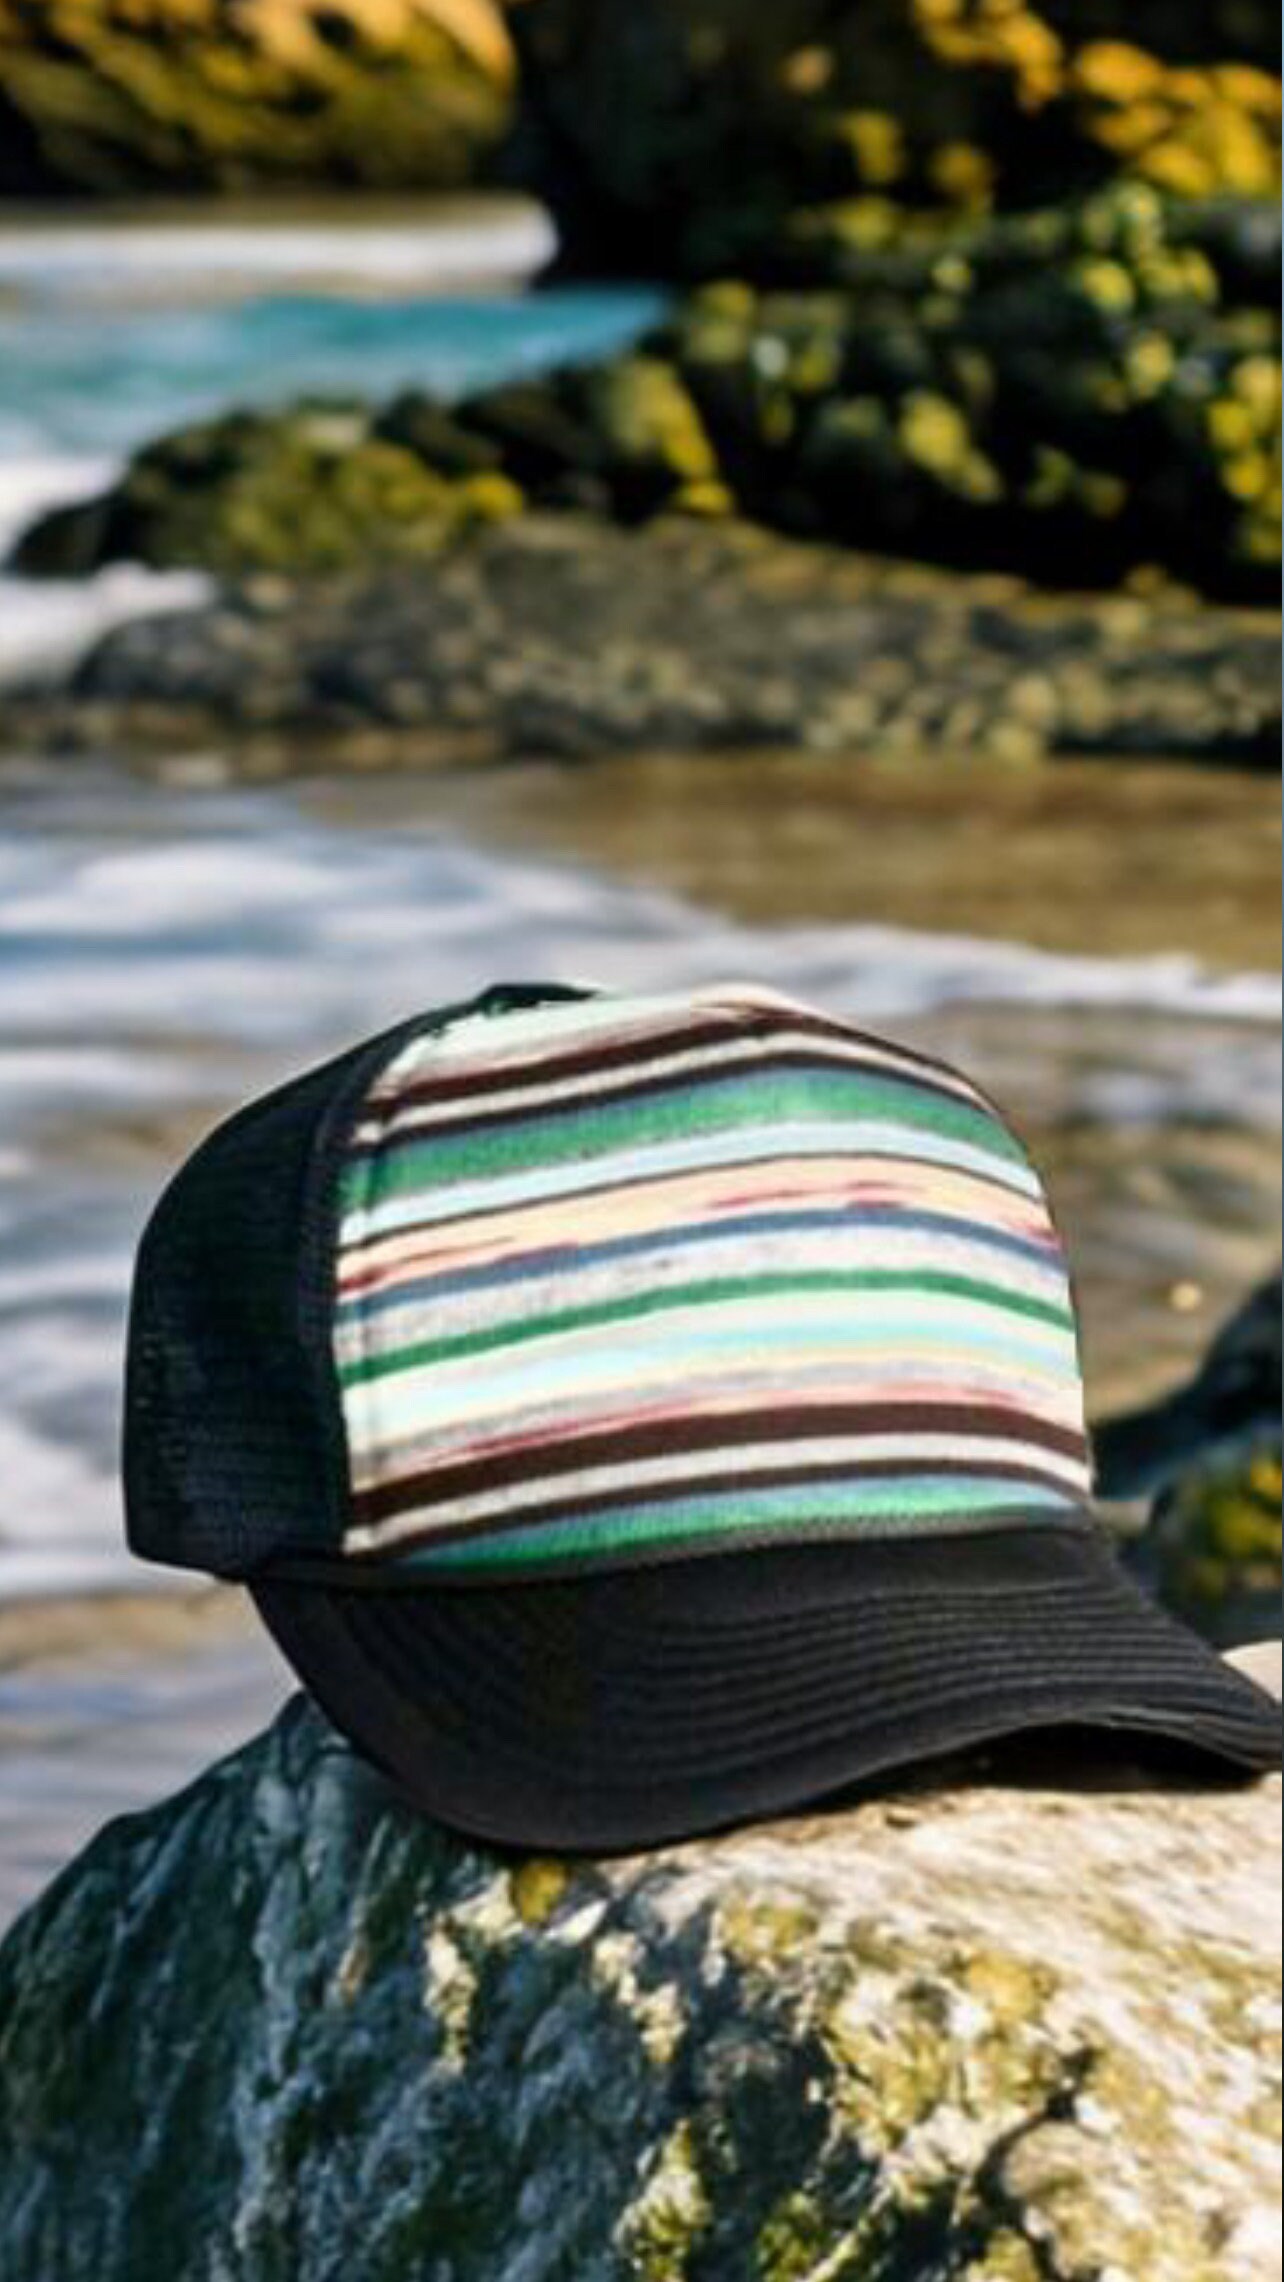 New Colorful Skinney Striped Trucker Hat, Gender Neutral. Verify